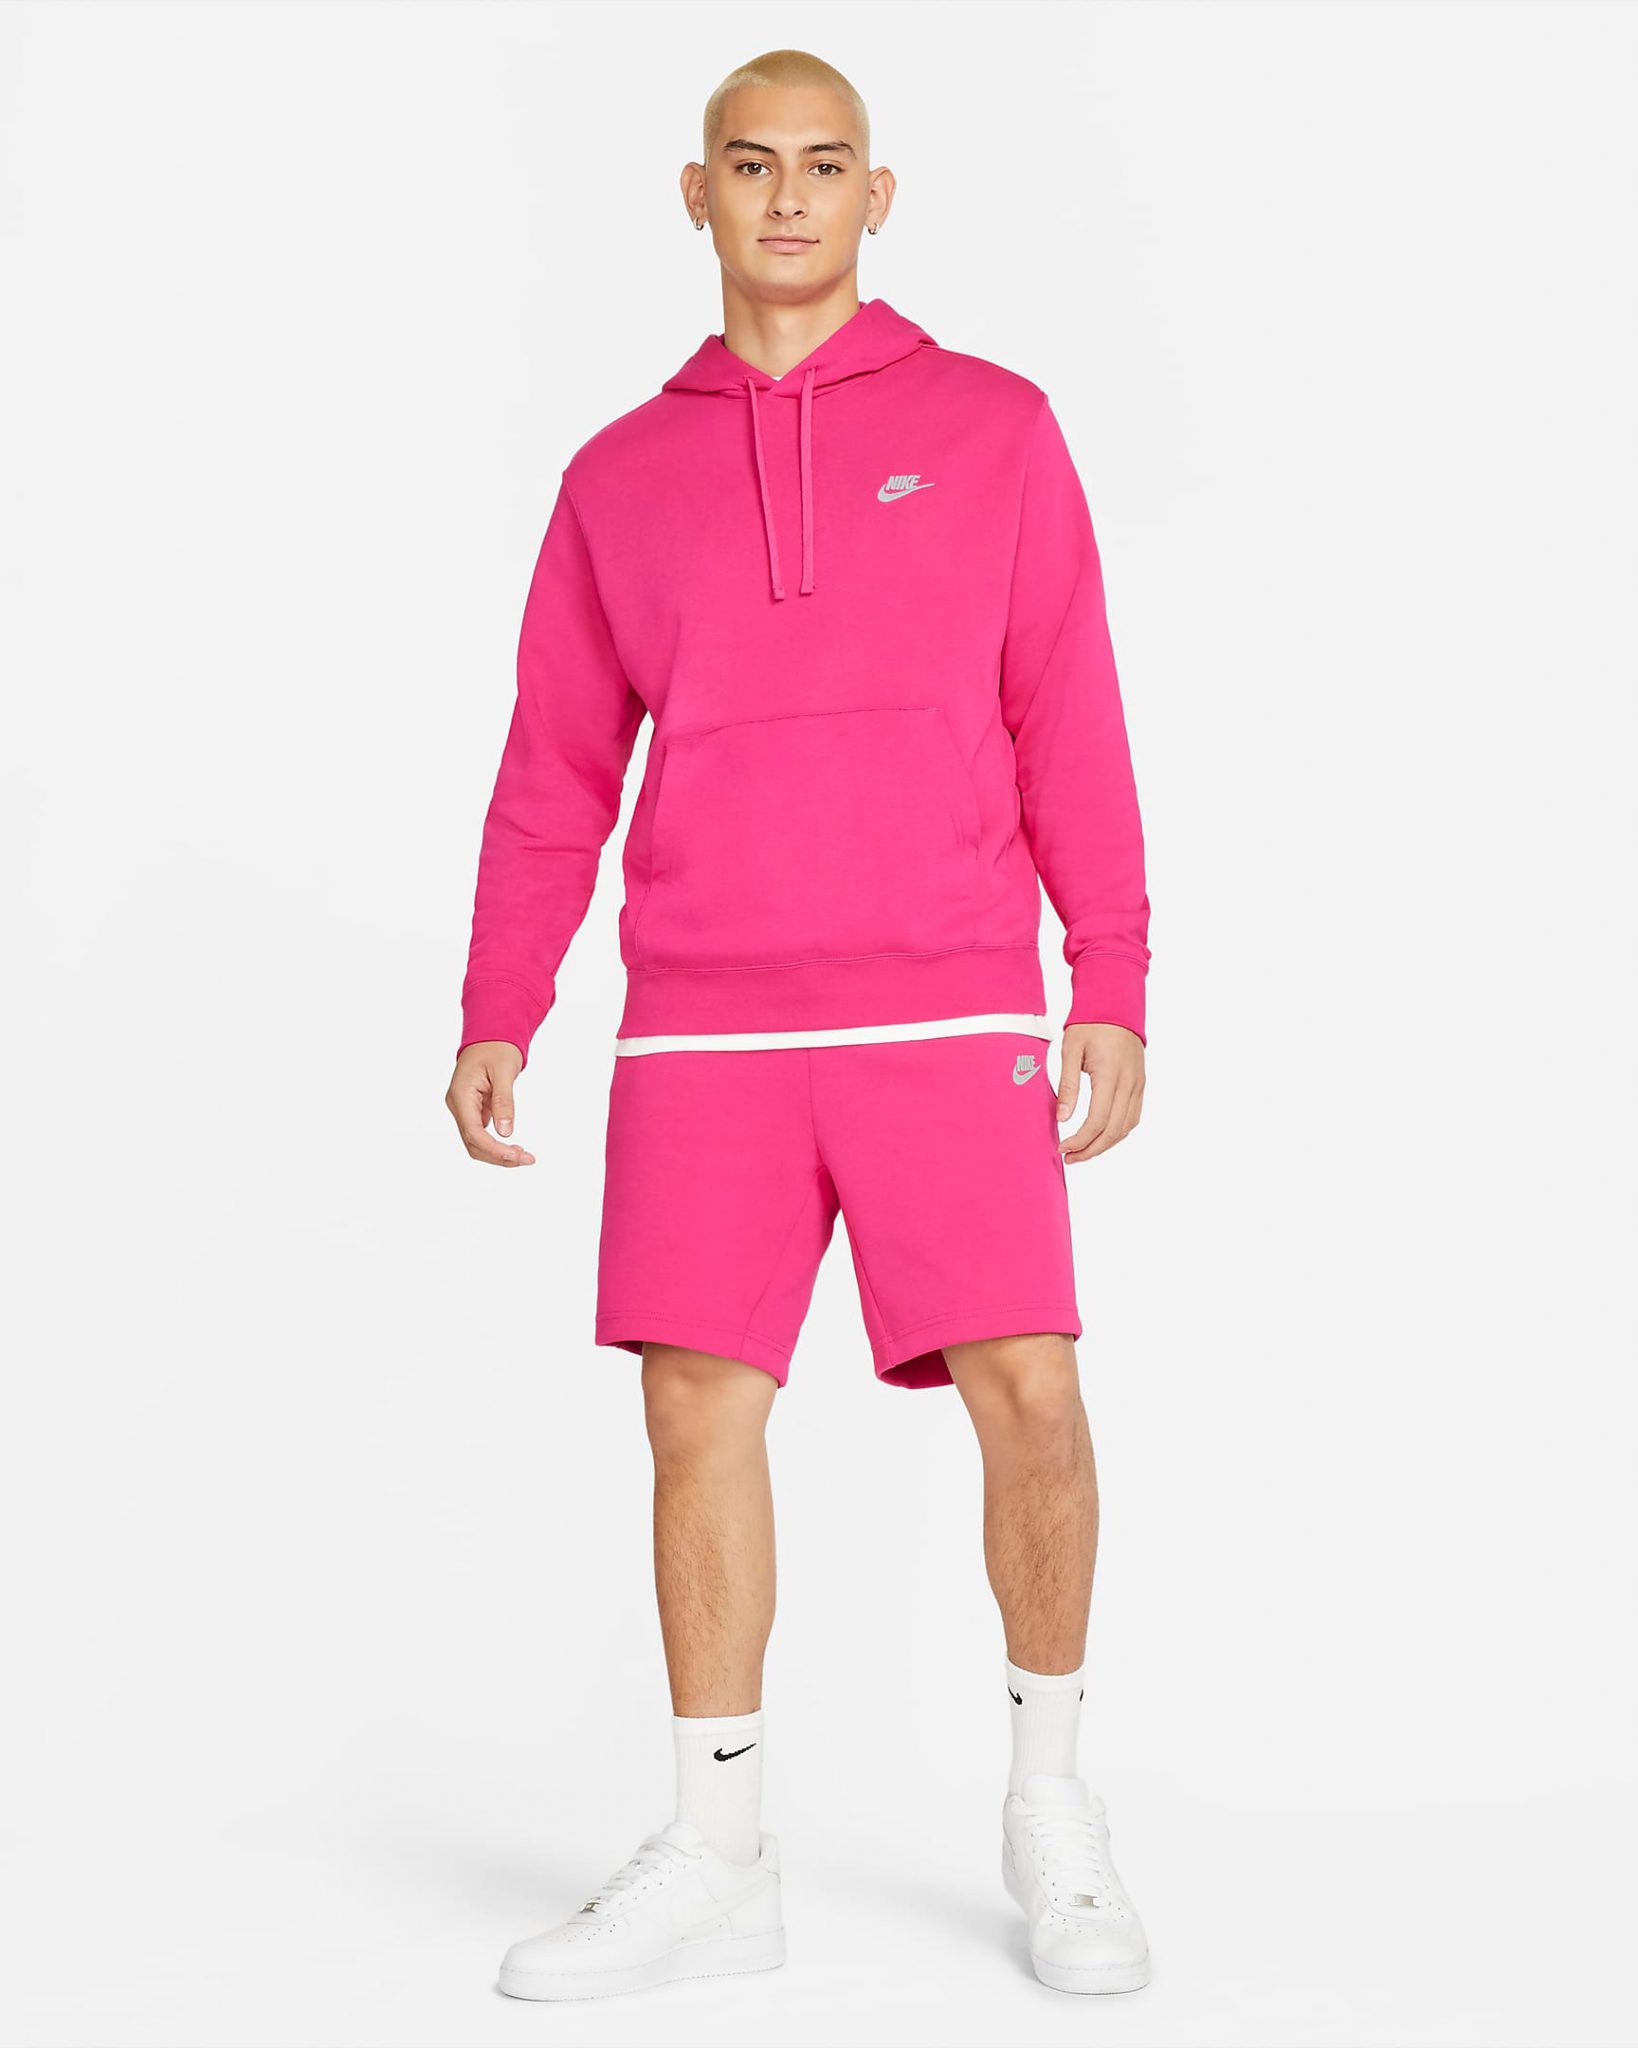 Nike Adapt Auto Max Fireberry Clothing Match | SneakerFits.com